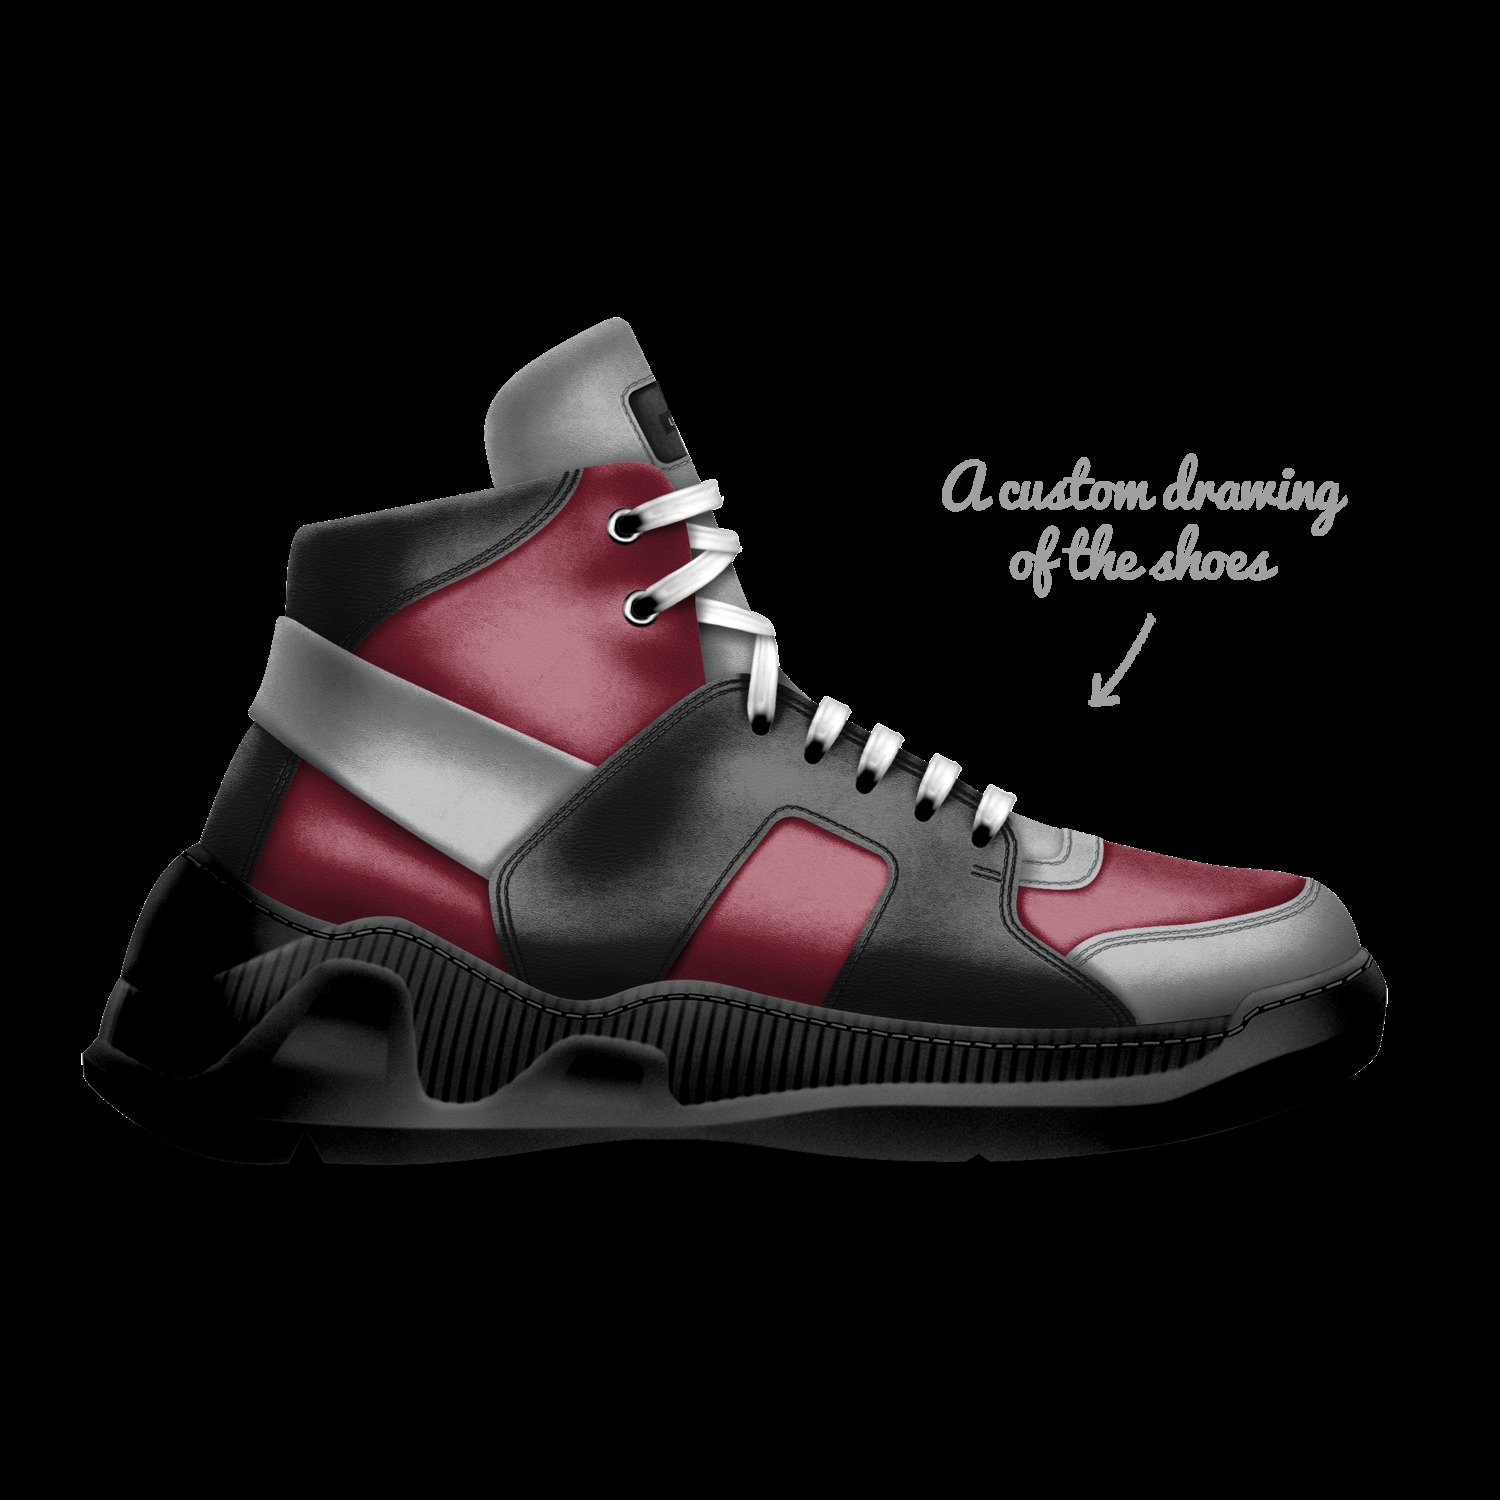 A Custom Shoe concept by Joanna Smith